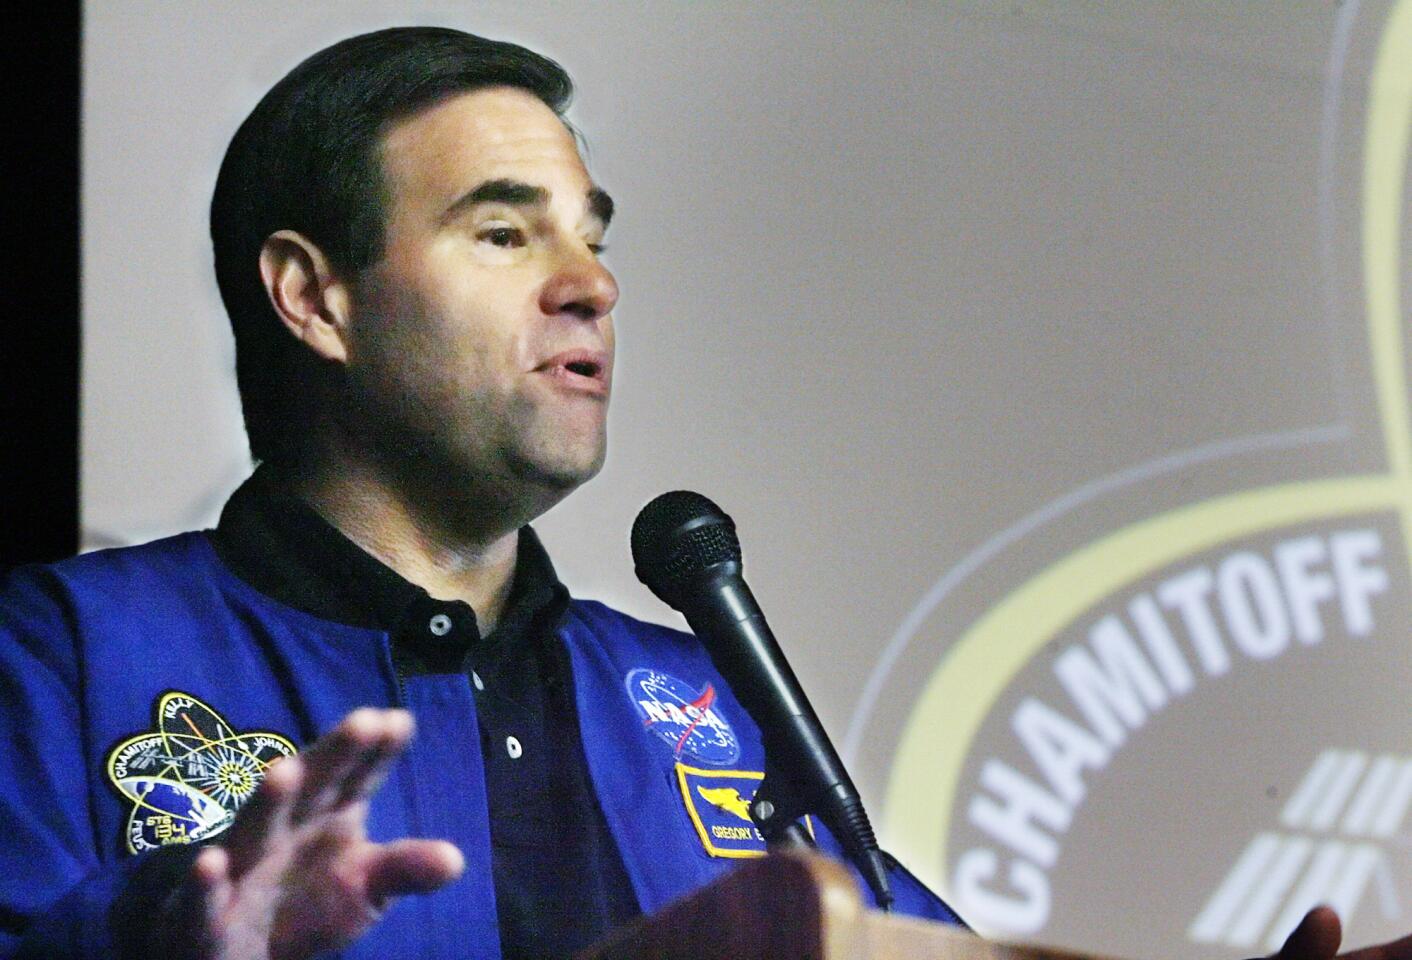 Astronaut speaks at Glendale school